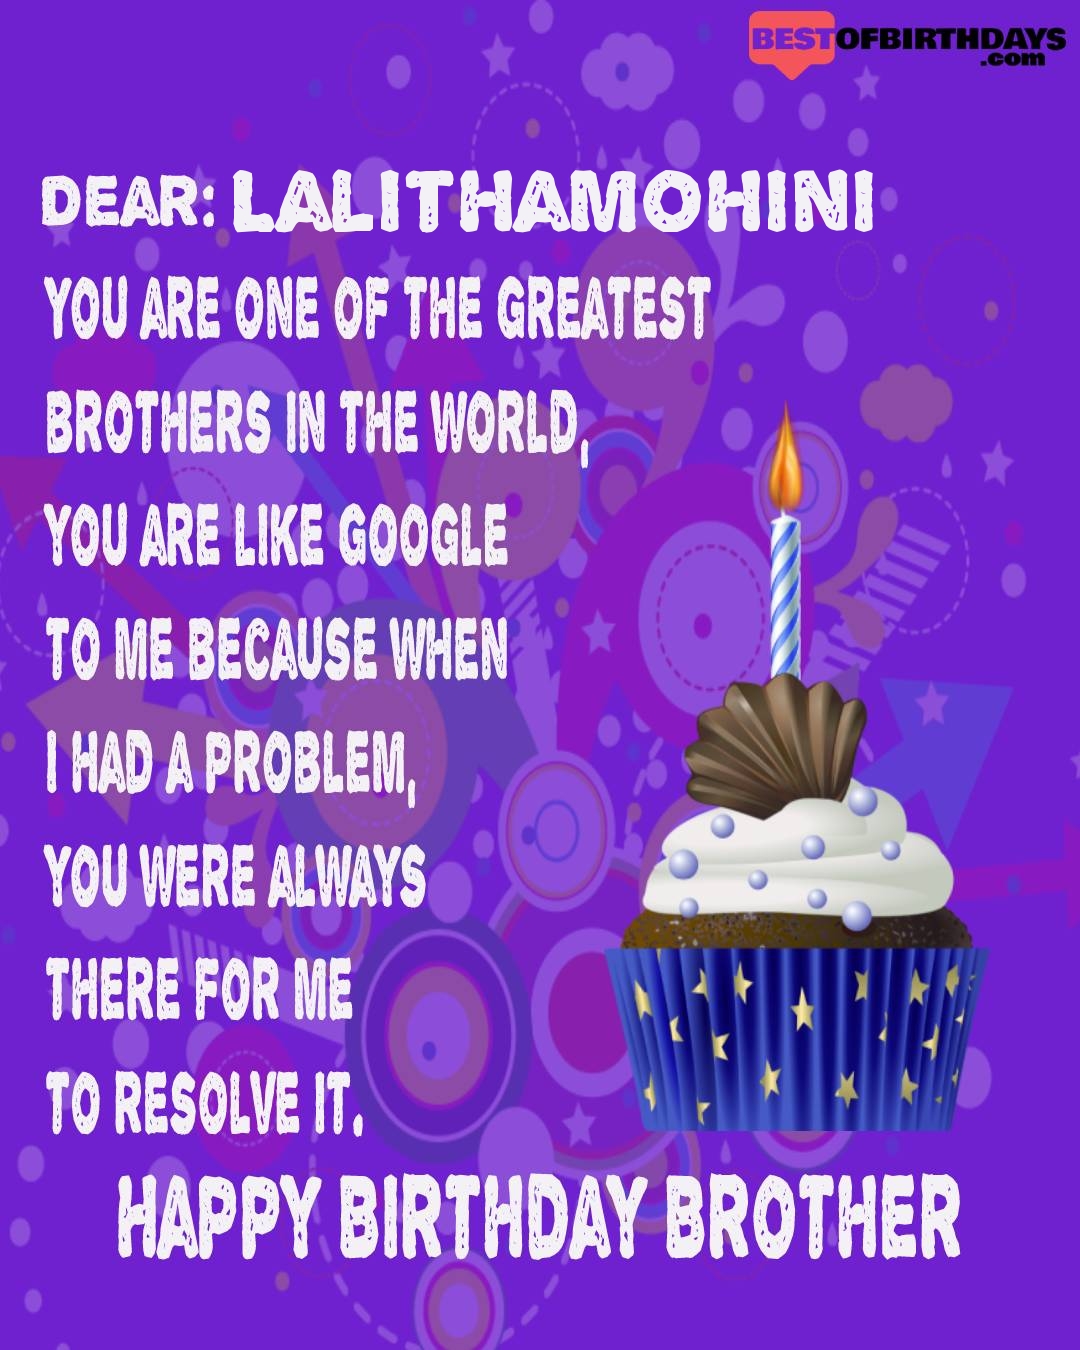 Happy birthday lalithamohini bhai brother bro